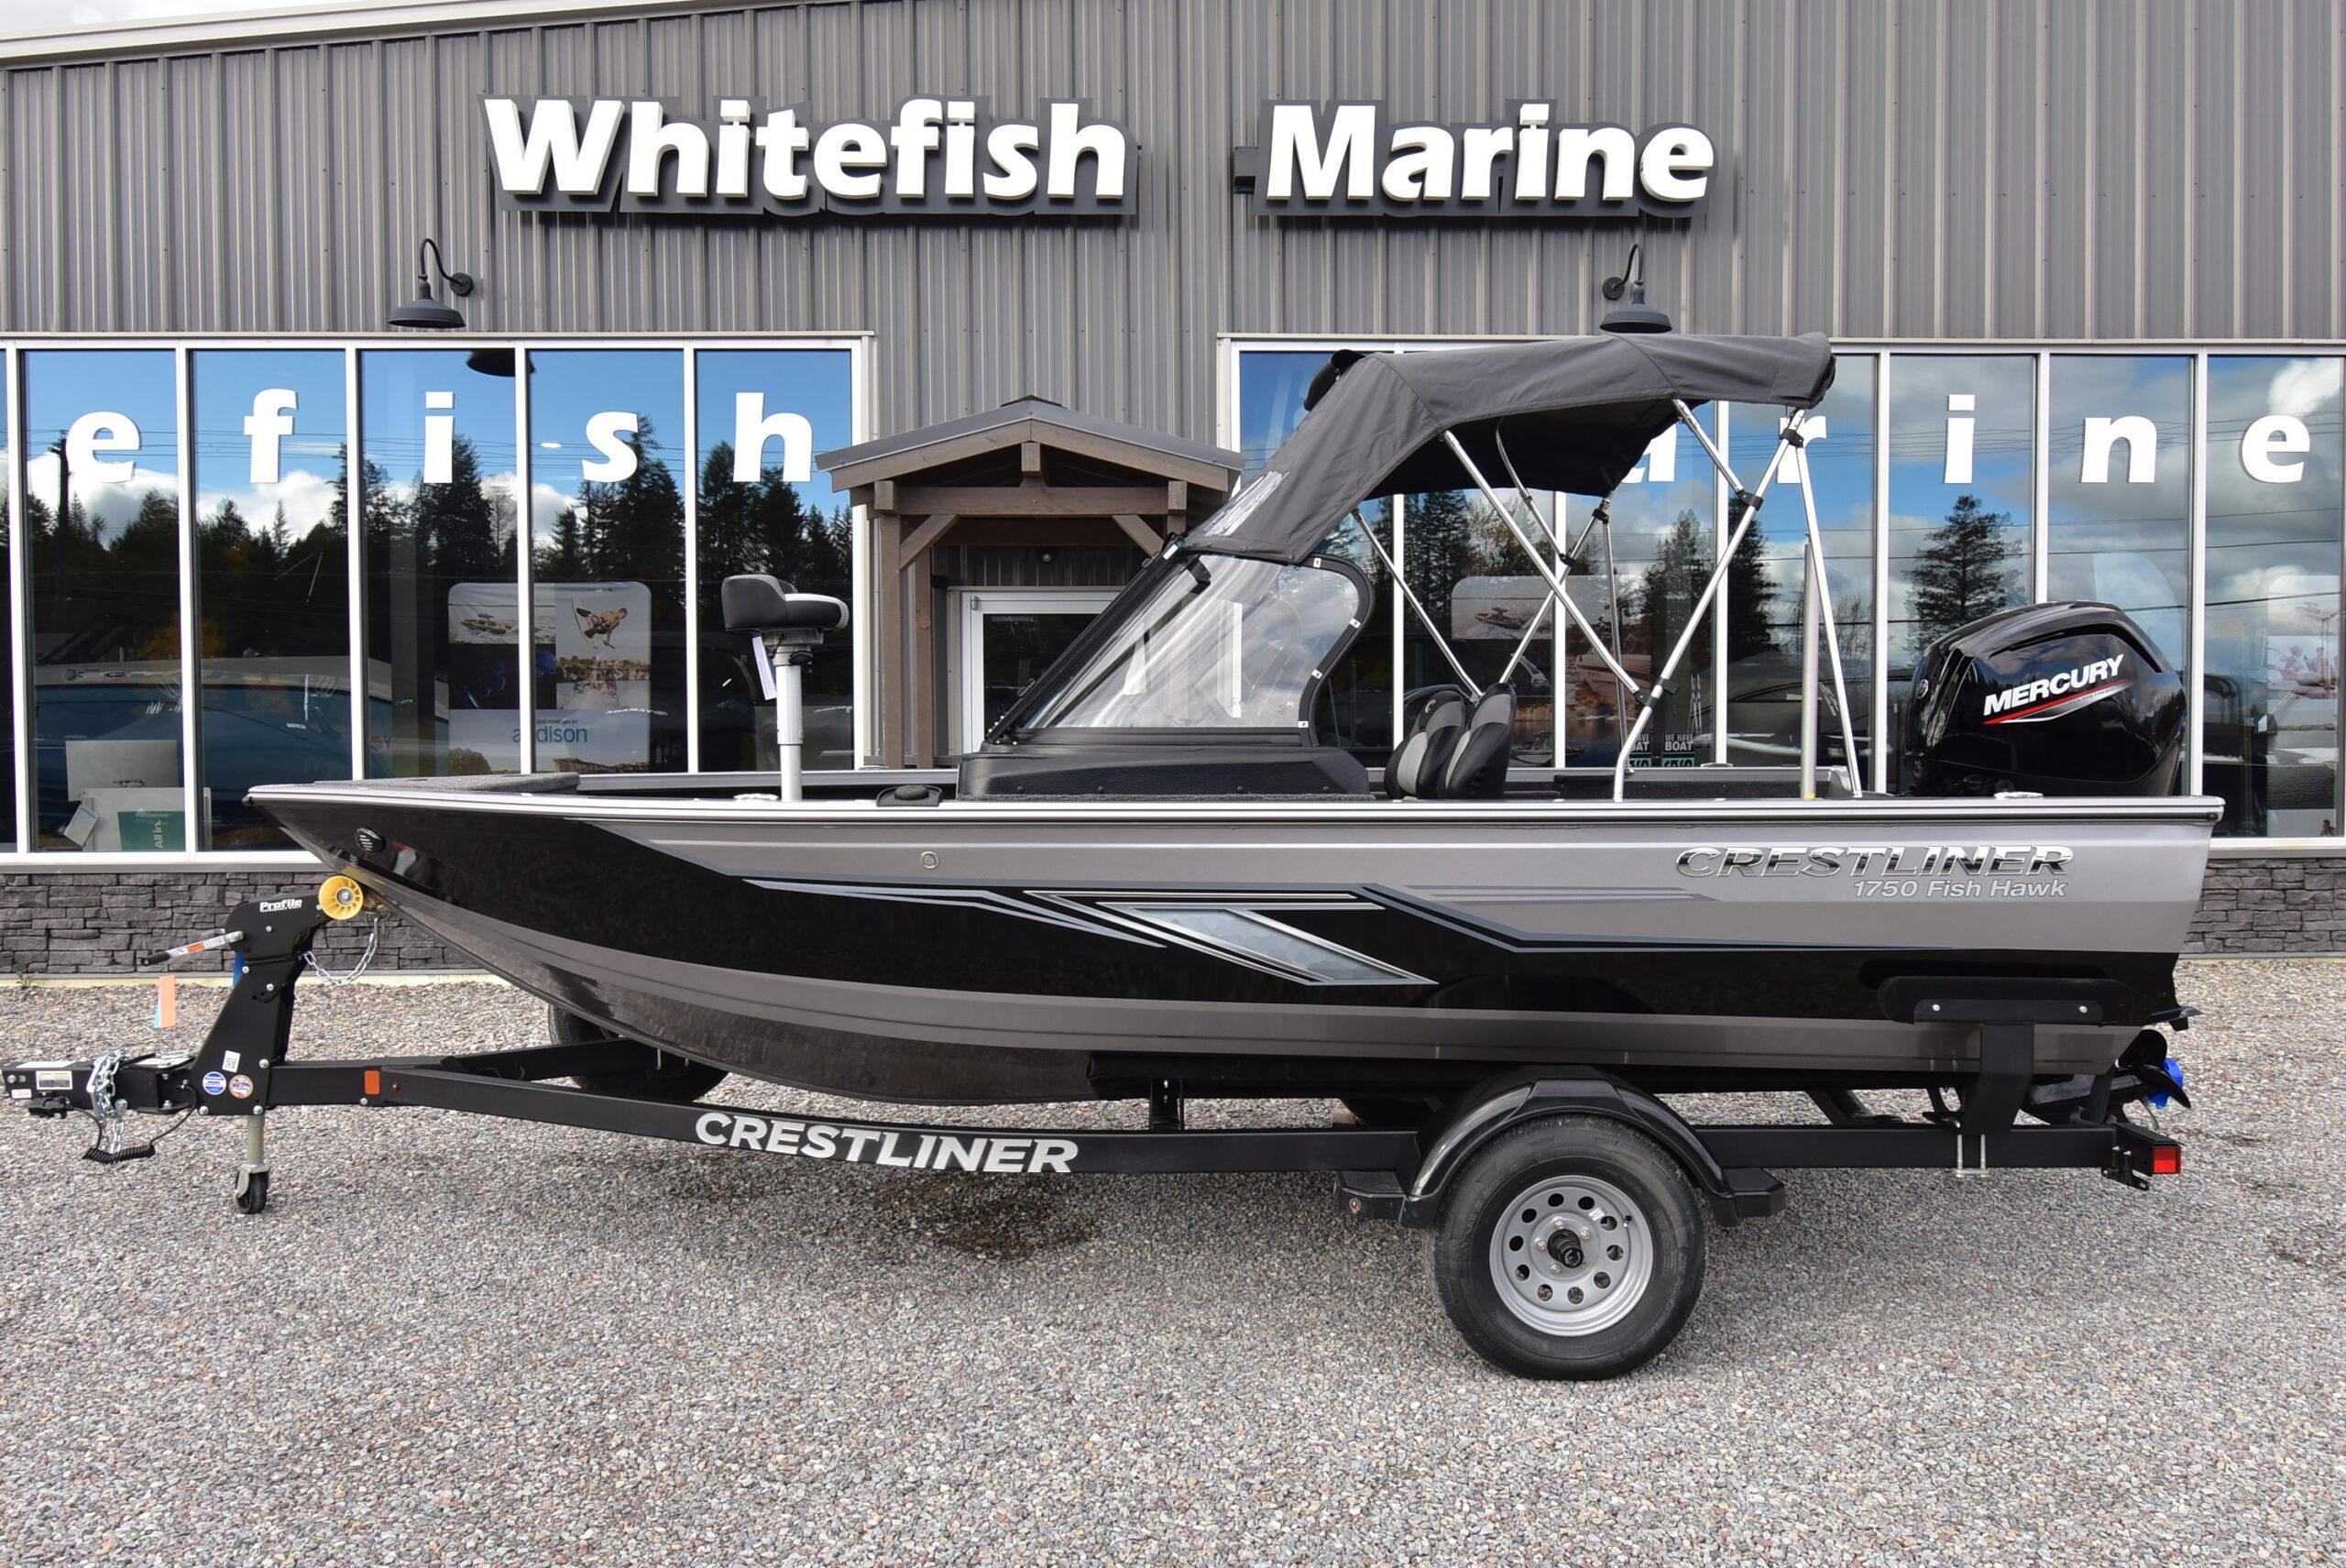 Crestliner1750 Fish Hawk kaufen - boats.com